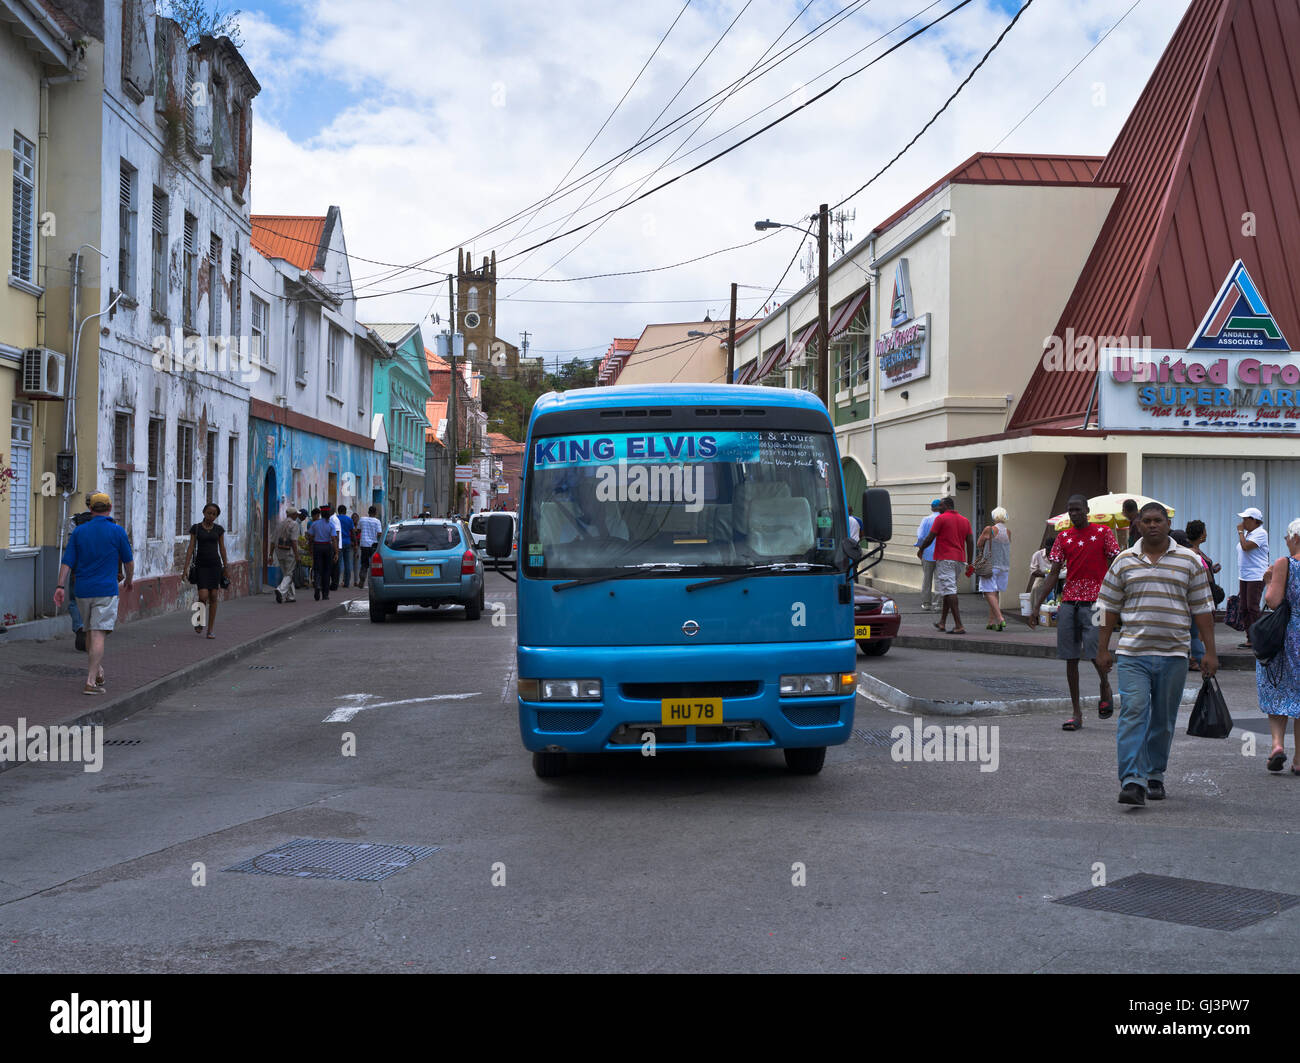 dh St George GRENADA CARIBBEAN Mini bus King Elvis town street scene georges Stock Photo